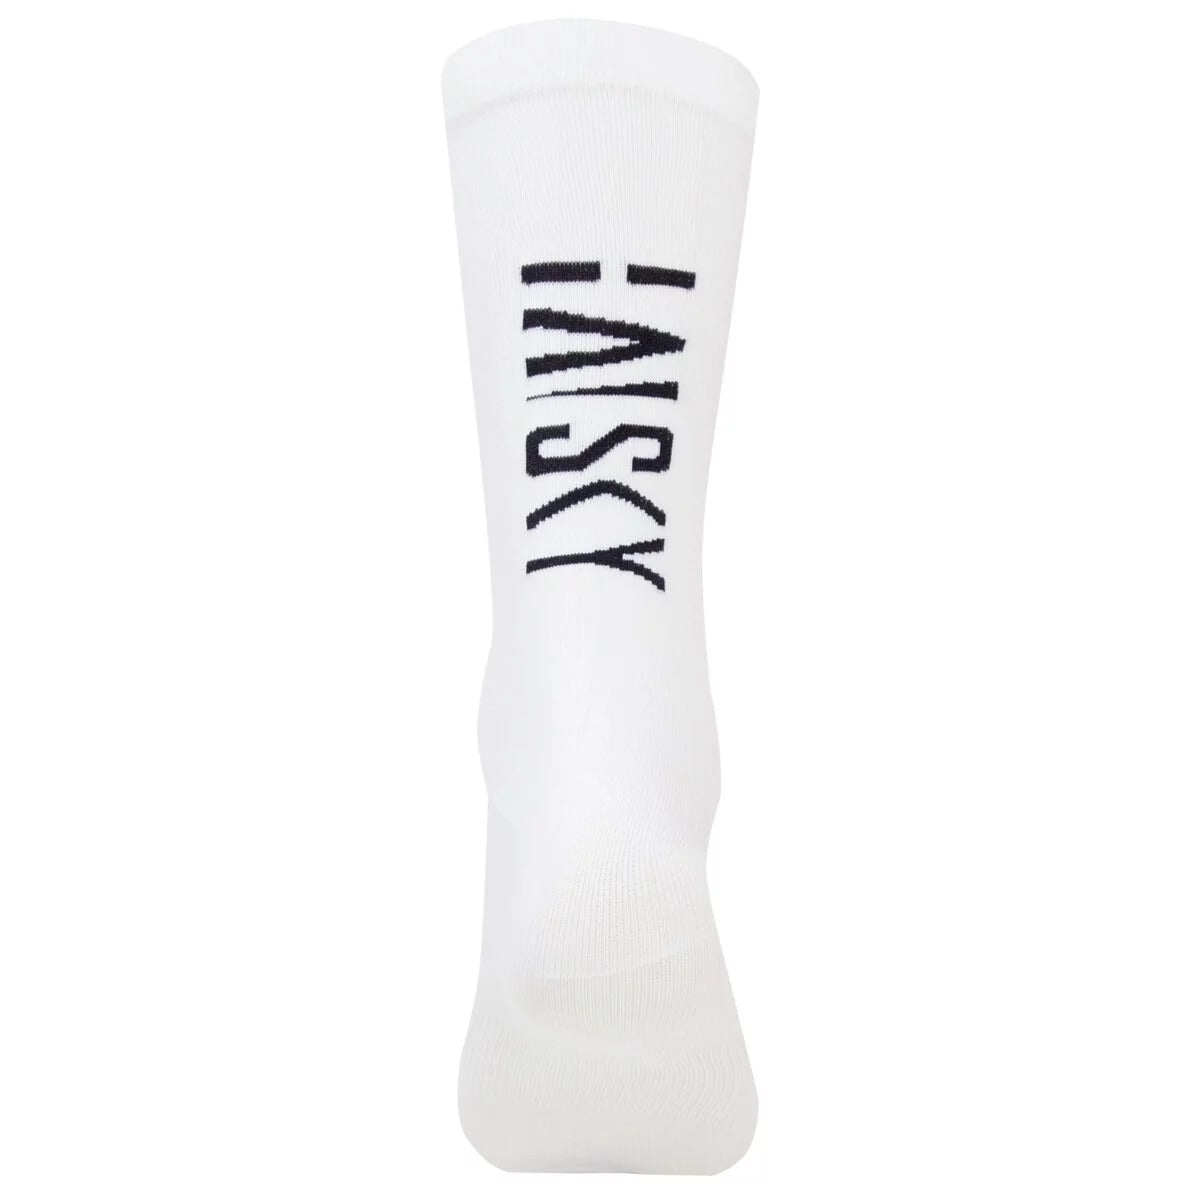 Baisky Premium Cycling Socks - TRSS129 Purity White